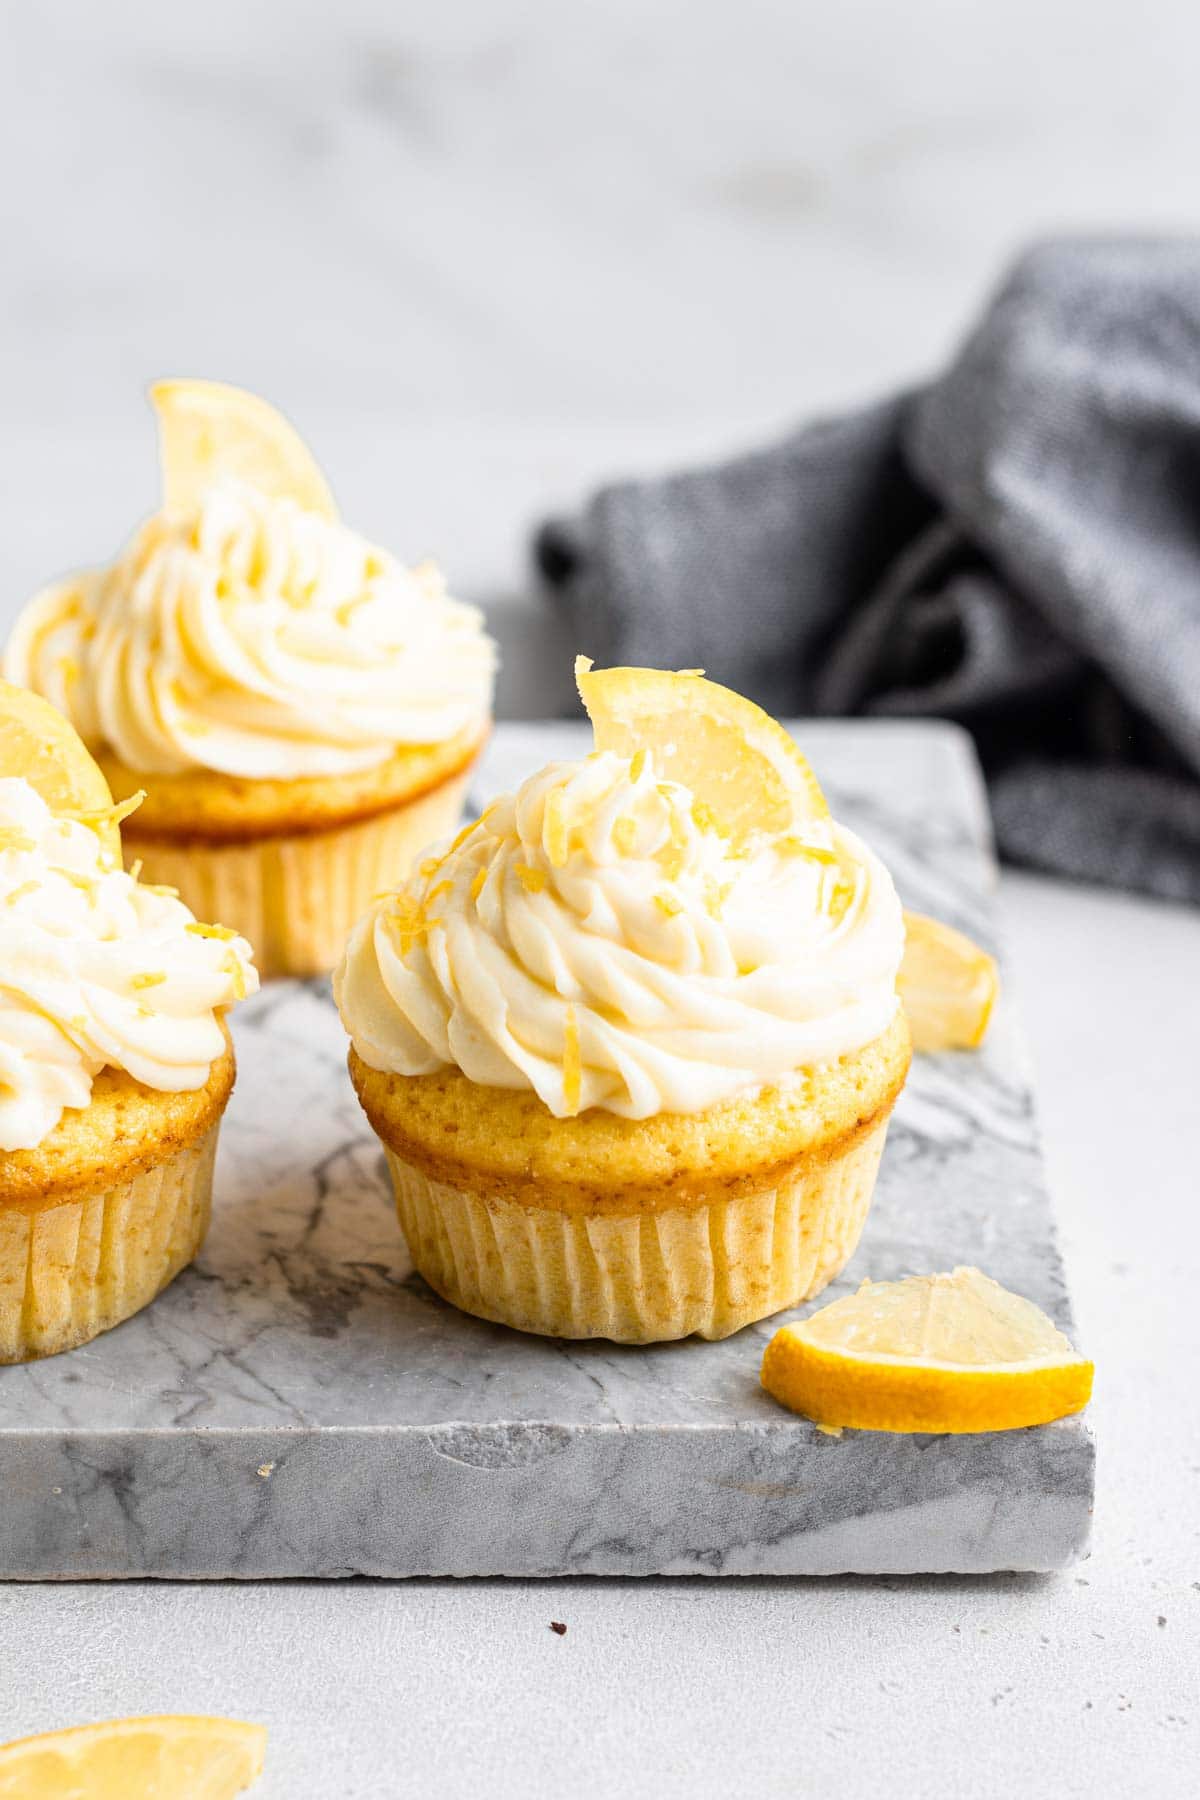 Lemon cupcakes with lemon cream cheese frosting.